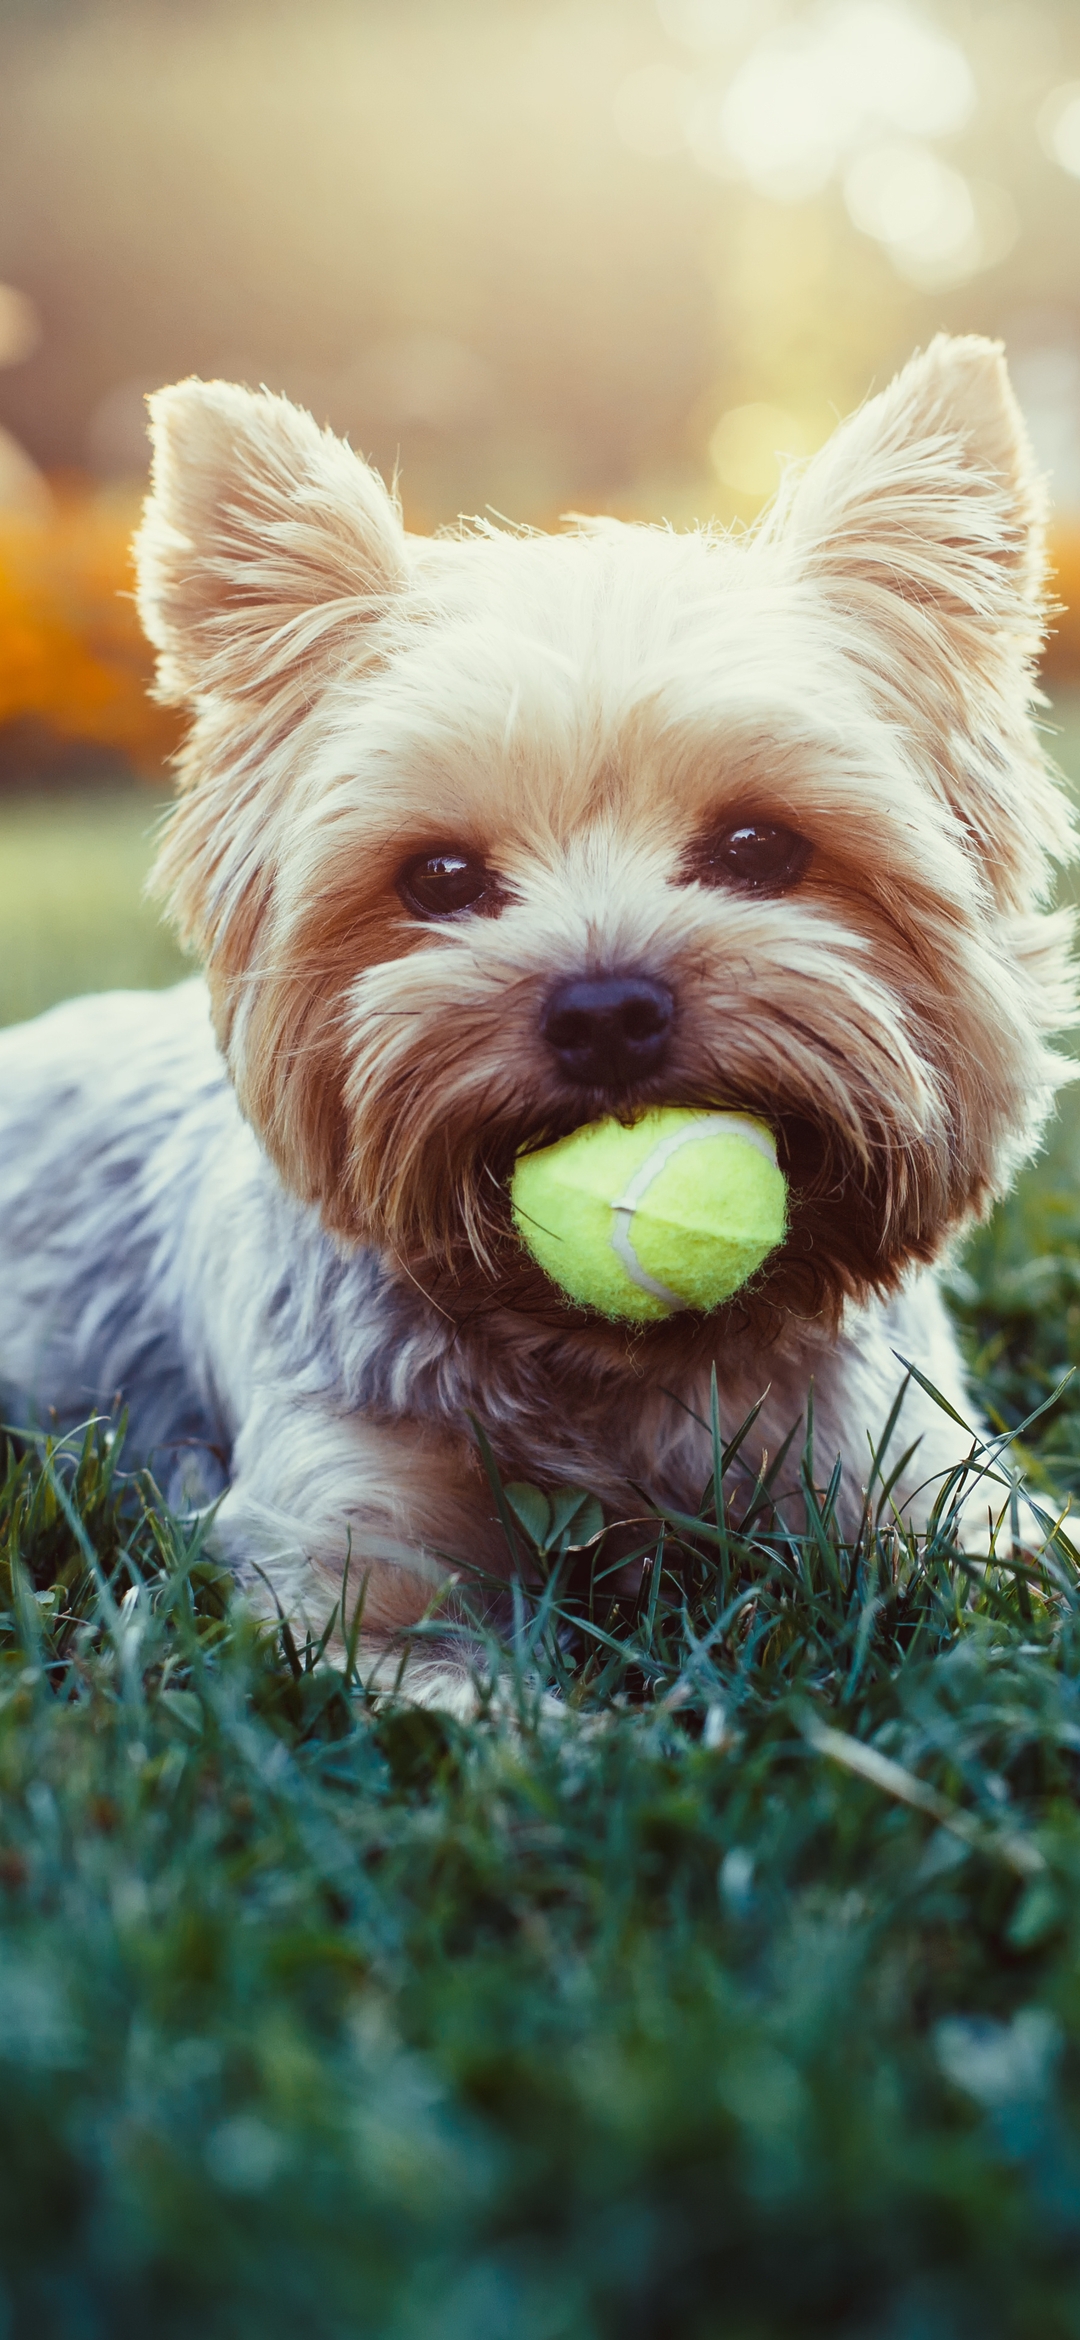 Картинка: Собачка, породистая, мячик, трава, лужайка, игра